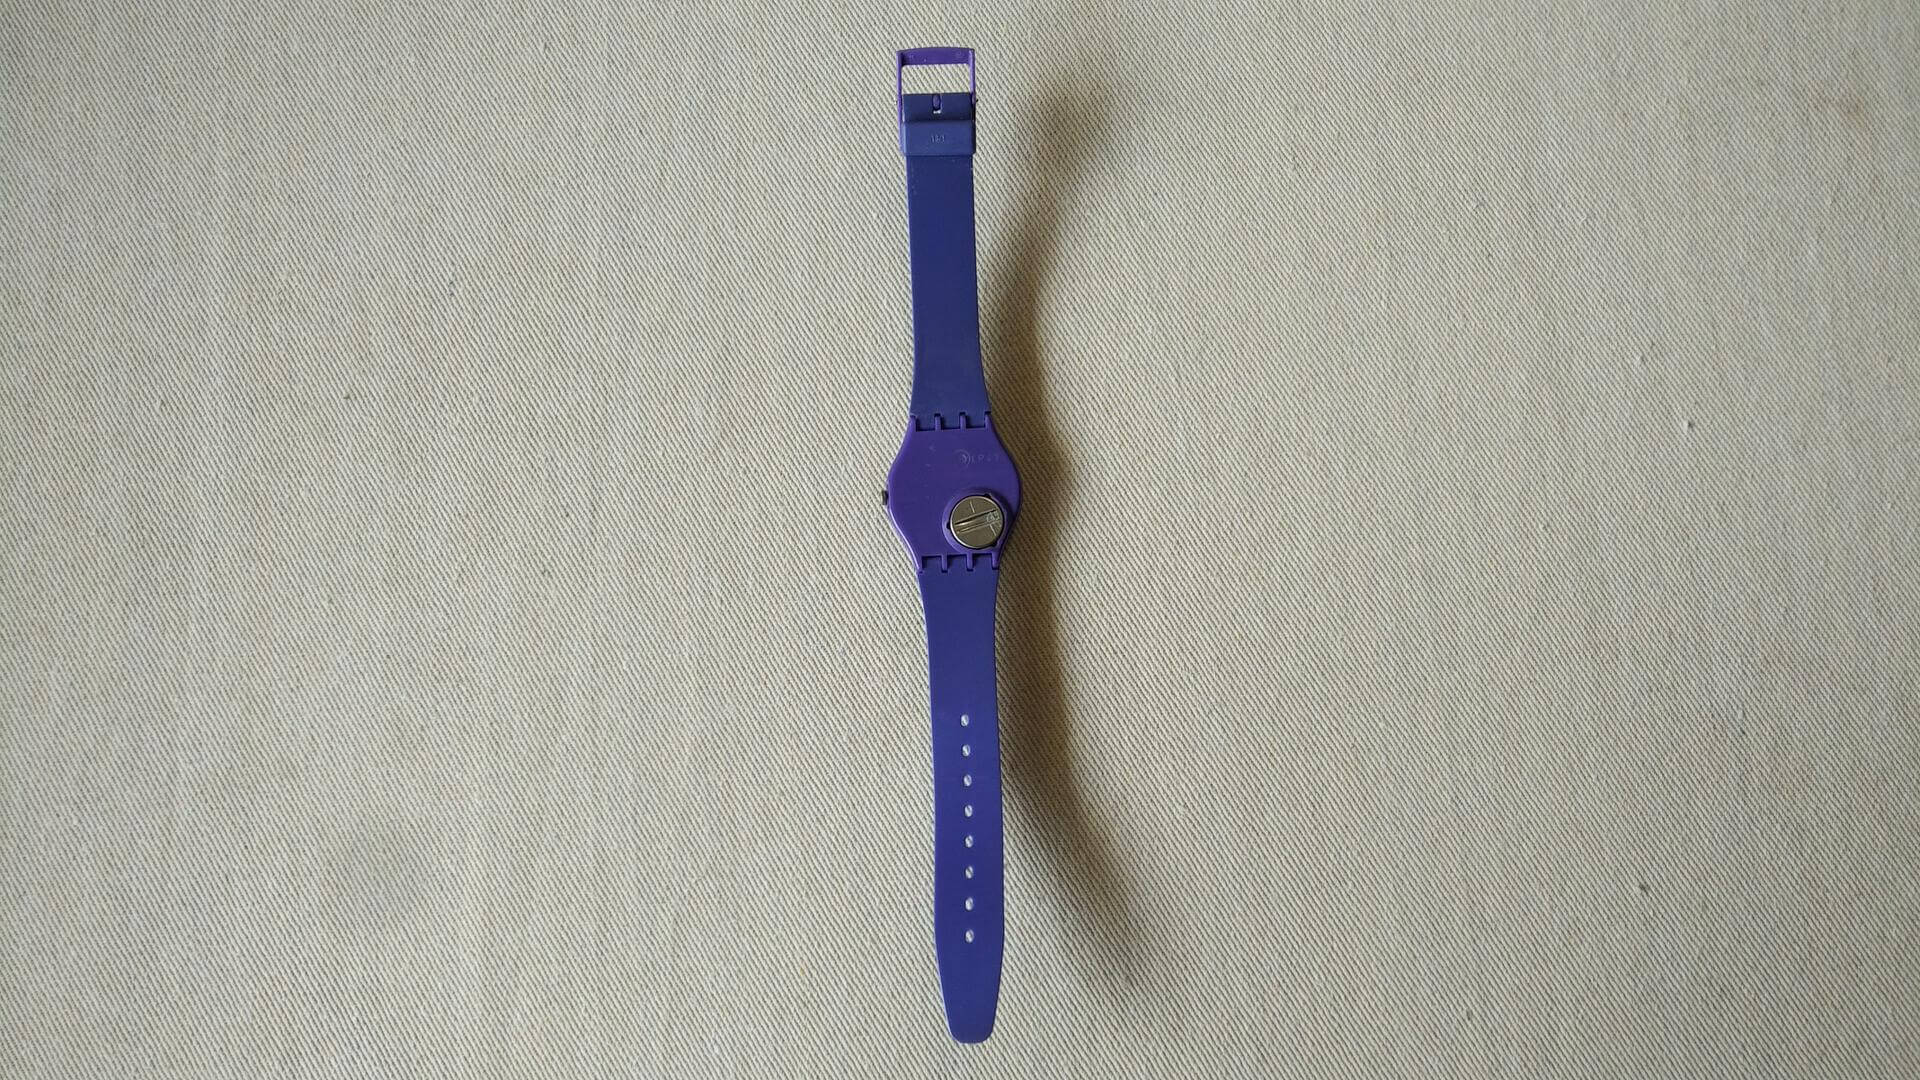 Nice purple white Swatch Wathch 2009 Callicarpa Vichy GV121 34mm diameter. Vintage made in Switzerland collectible Swatch wrist watch